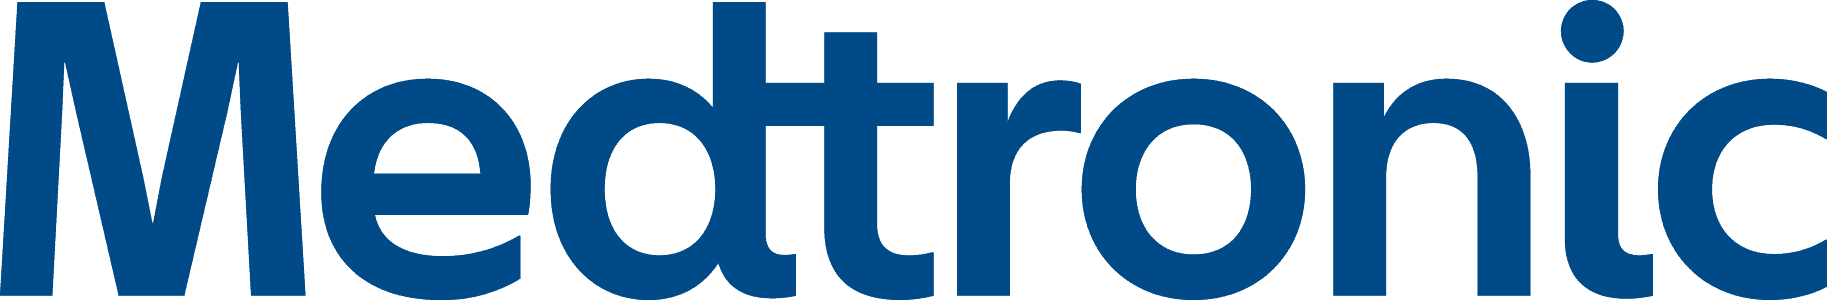 Testimonial company logo